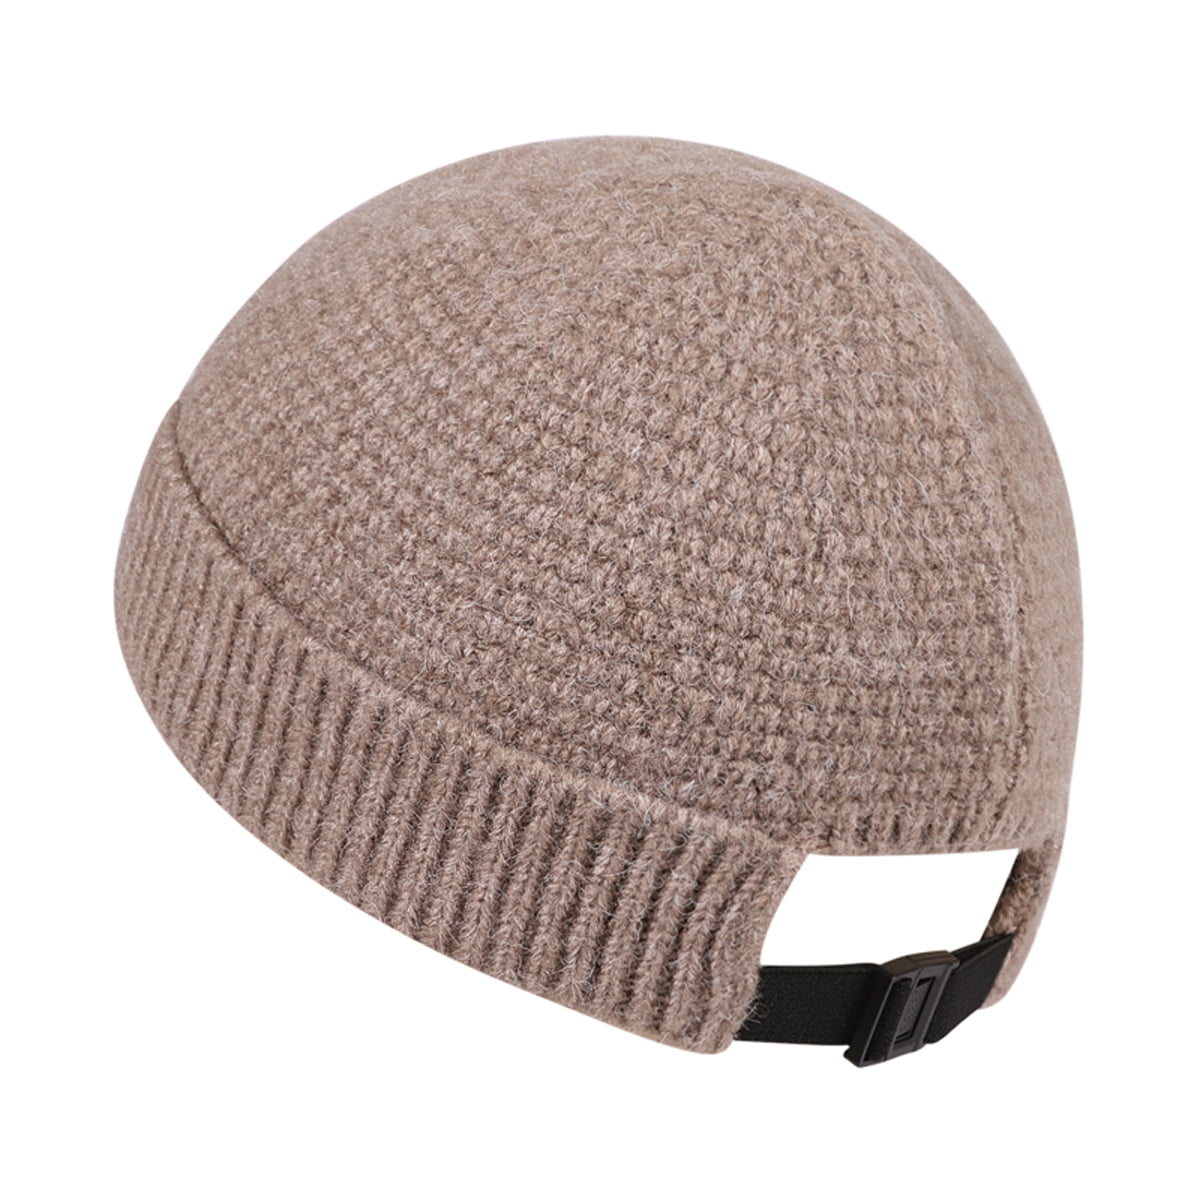 GRNSHTS Unisex Knit Cuff Beanie Winter Warm Adjustable Strap Roll up Edge  Skullcap Fisherman Hat for Men Women Coffee